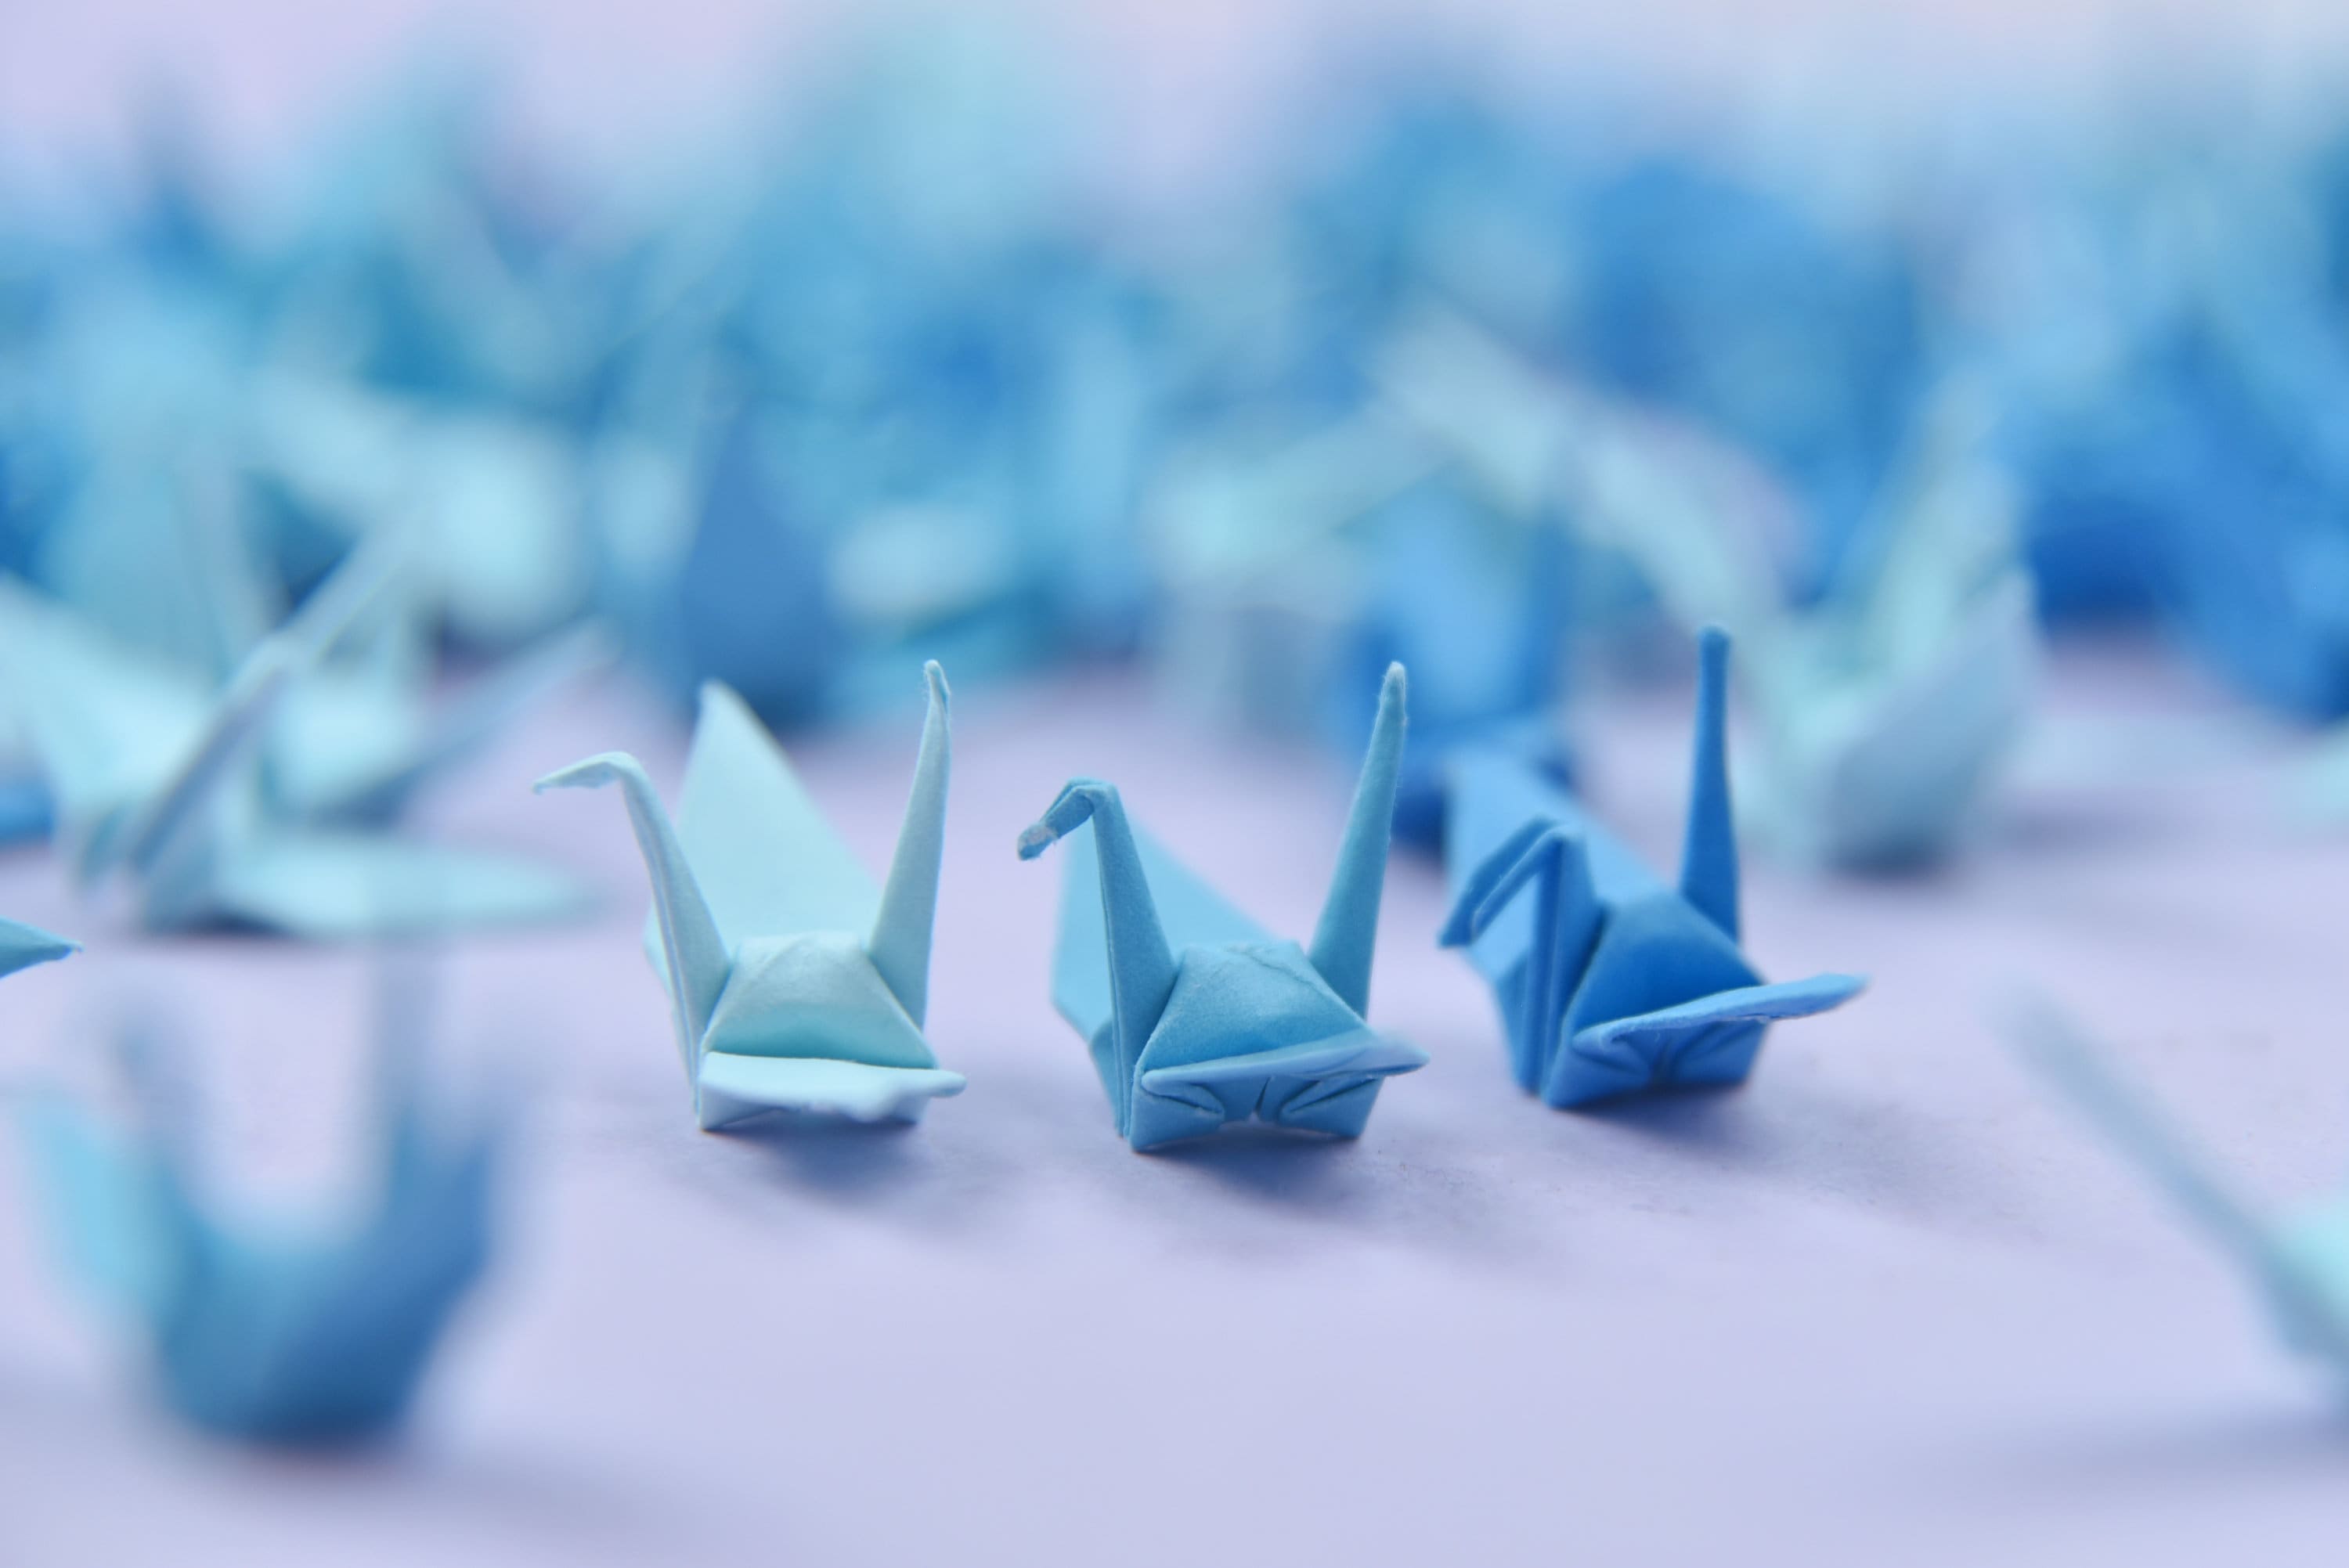 1000 Origami Paper Crane Blue Shade Tone Origami crane pequeña 1.5x1.5 pulgadas para decoración de bodas, regalo de aniversario, San Valentín